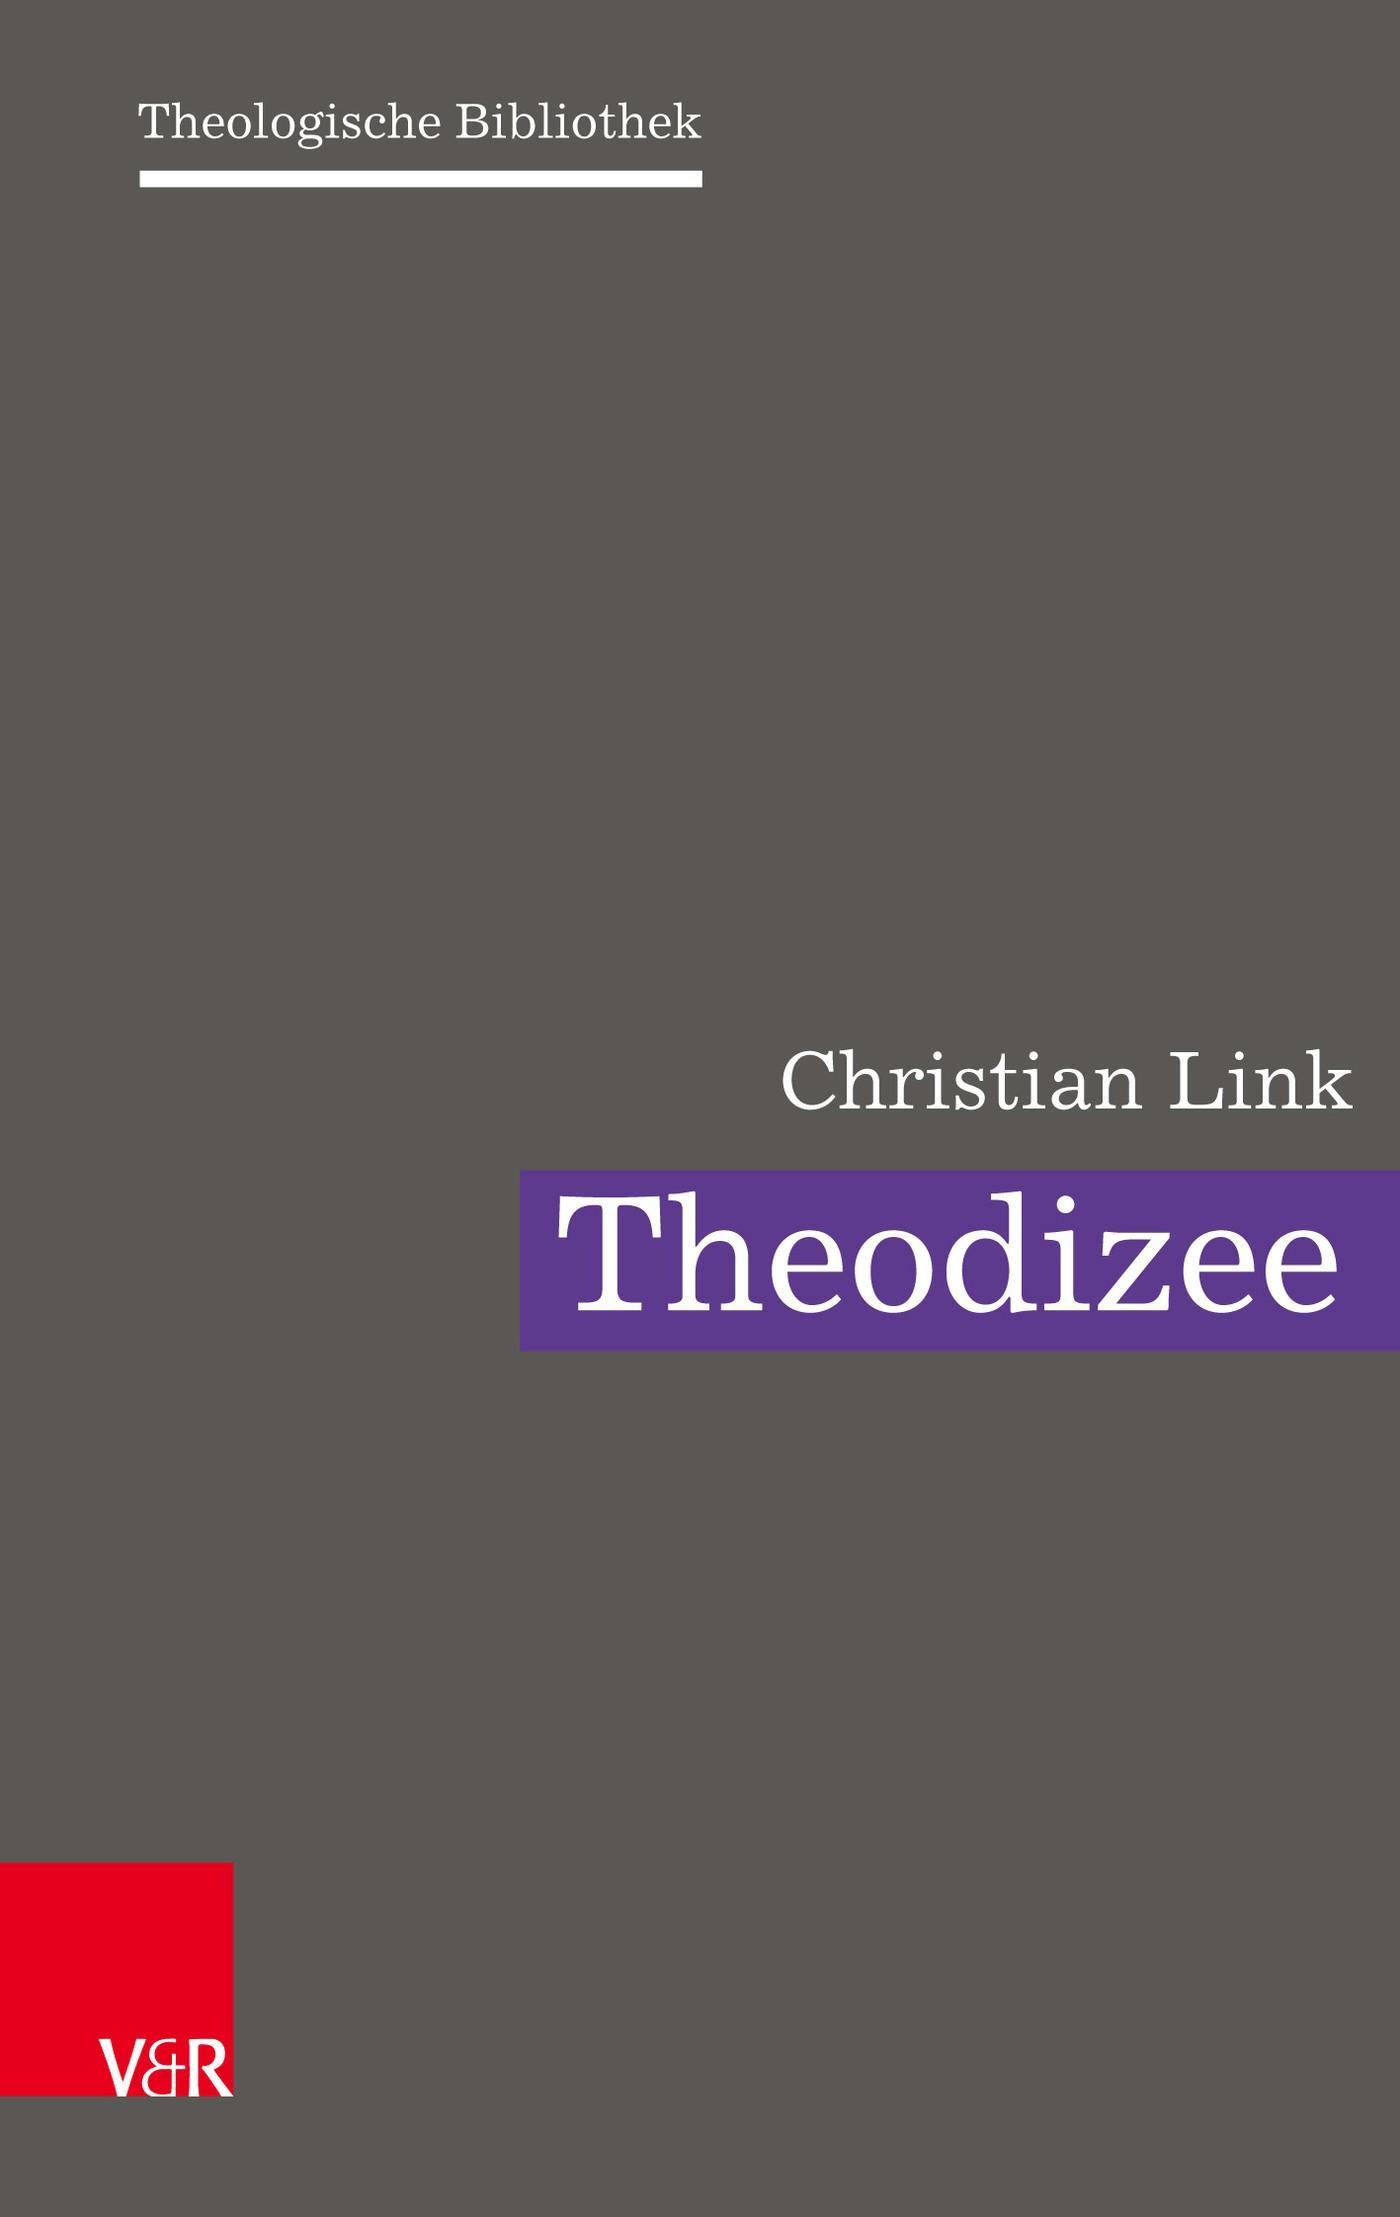 Theodizee / Theologische Bibliothek